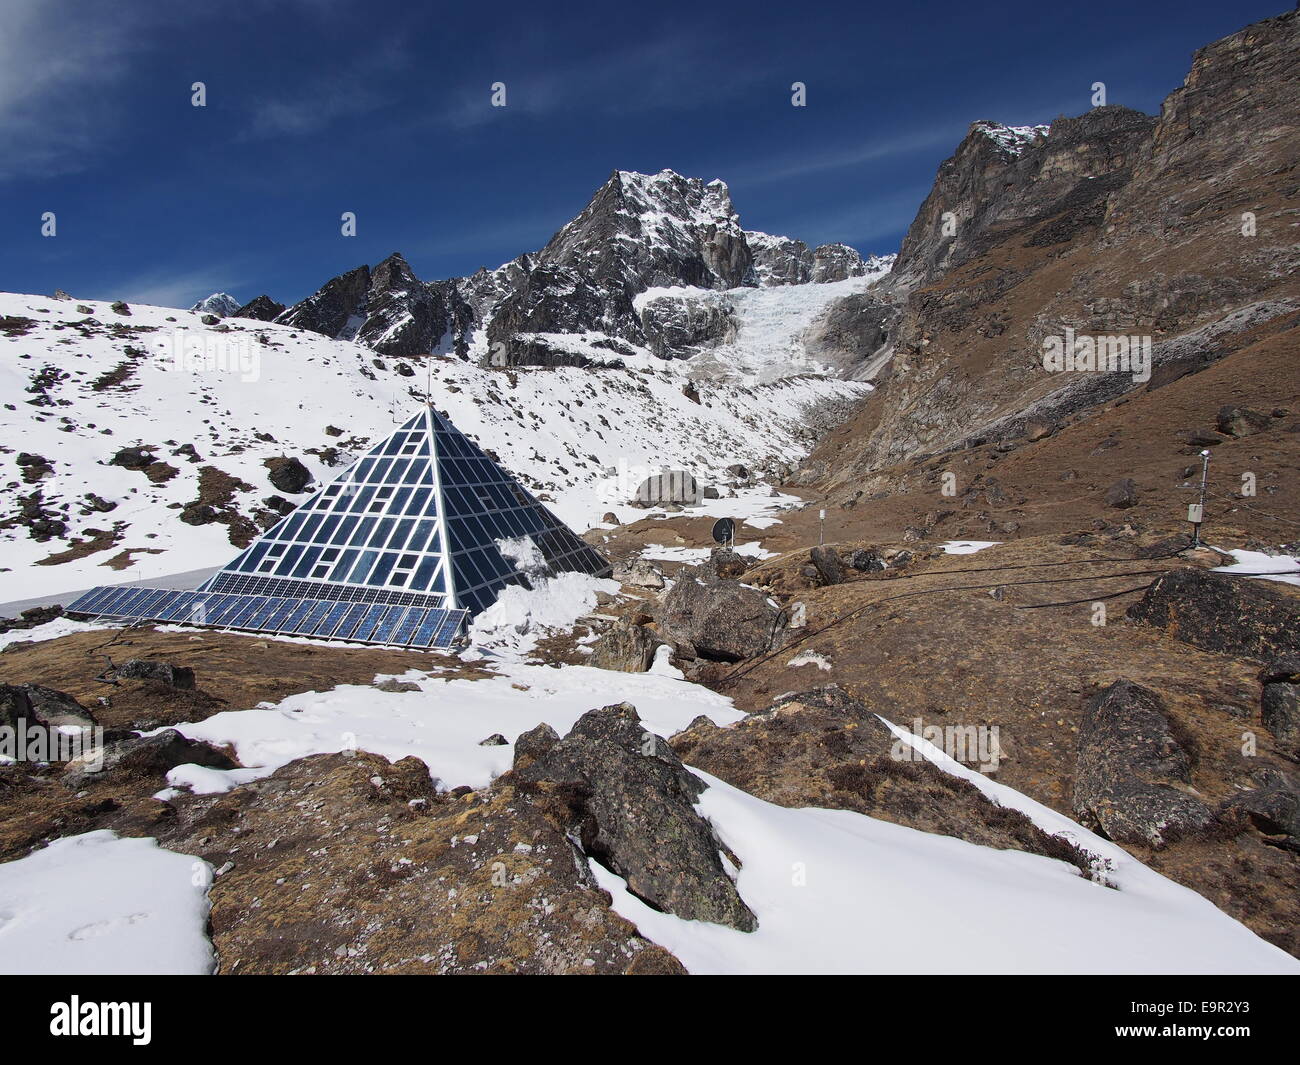 Ev-K2-CNR aka Italian Pyramid, a high-altitude scientific research center located near Mount Everest in the Khumbu Region of Nepal. Stock Photo